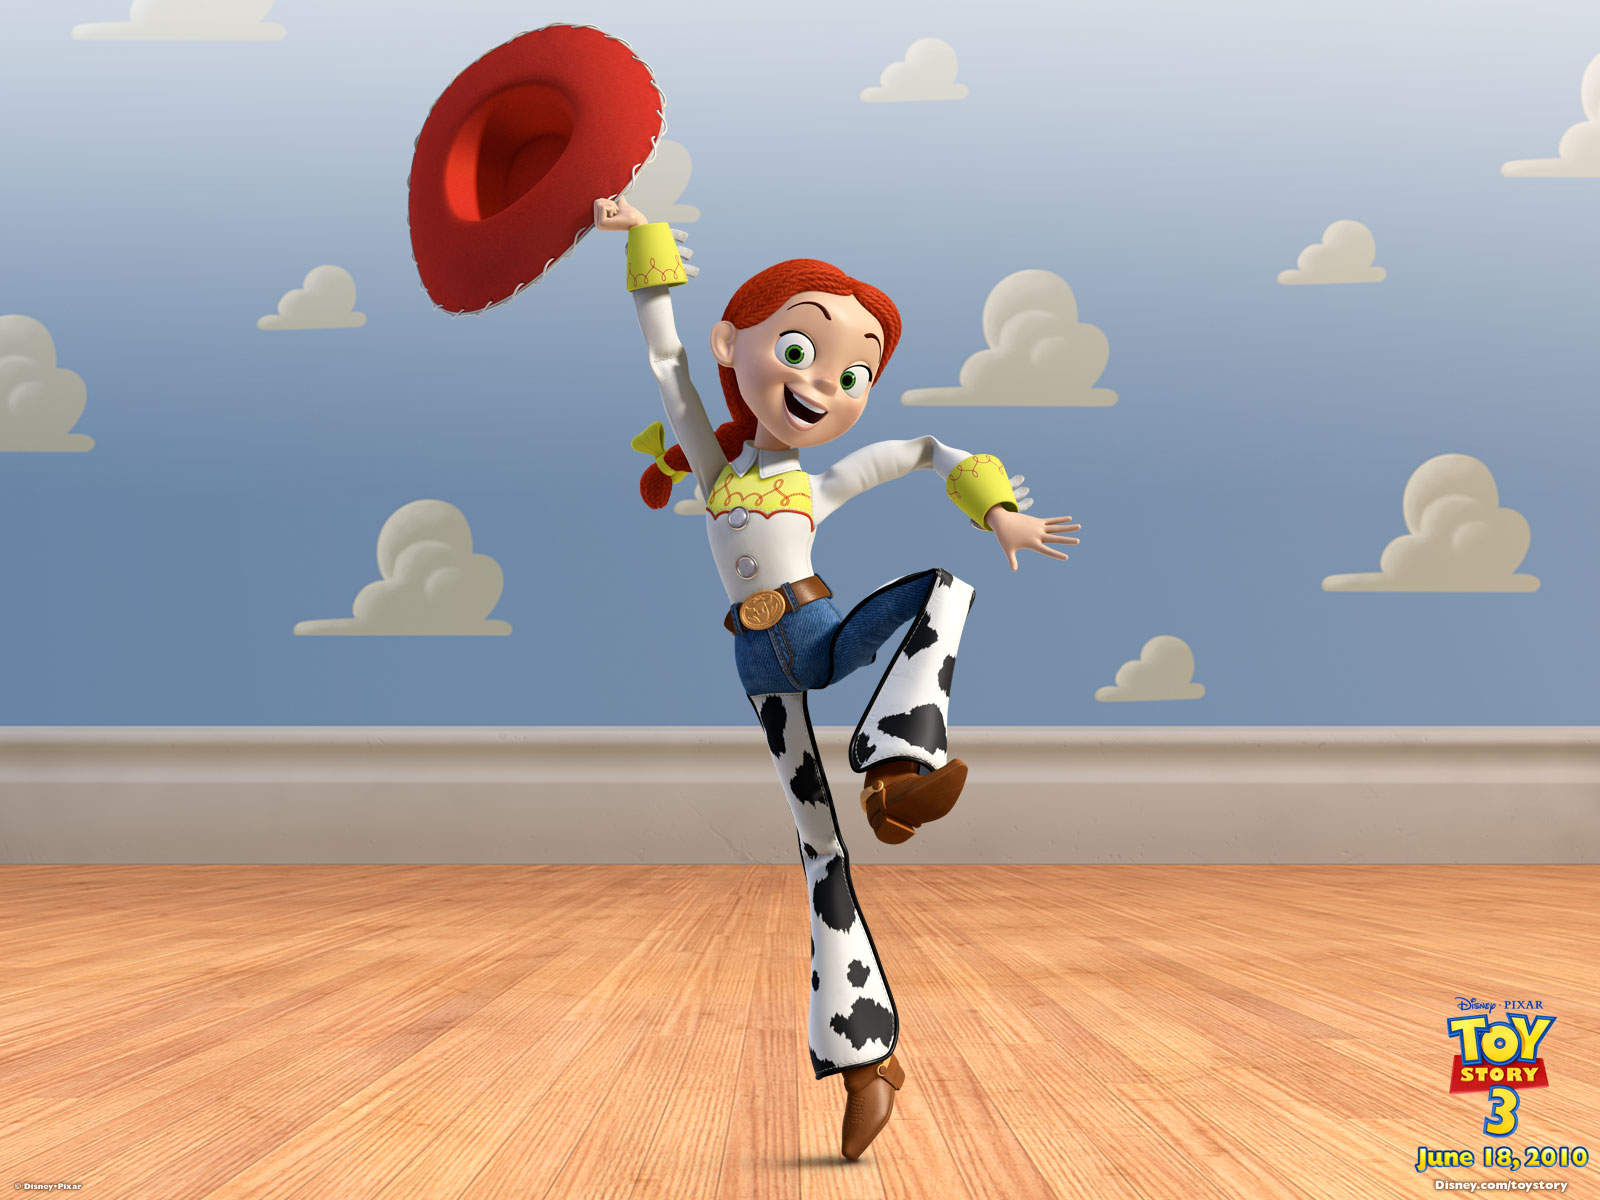 Toy Story 3 - Toy Story 3 Wallpaper (36440445) - Fanpop